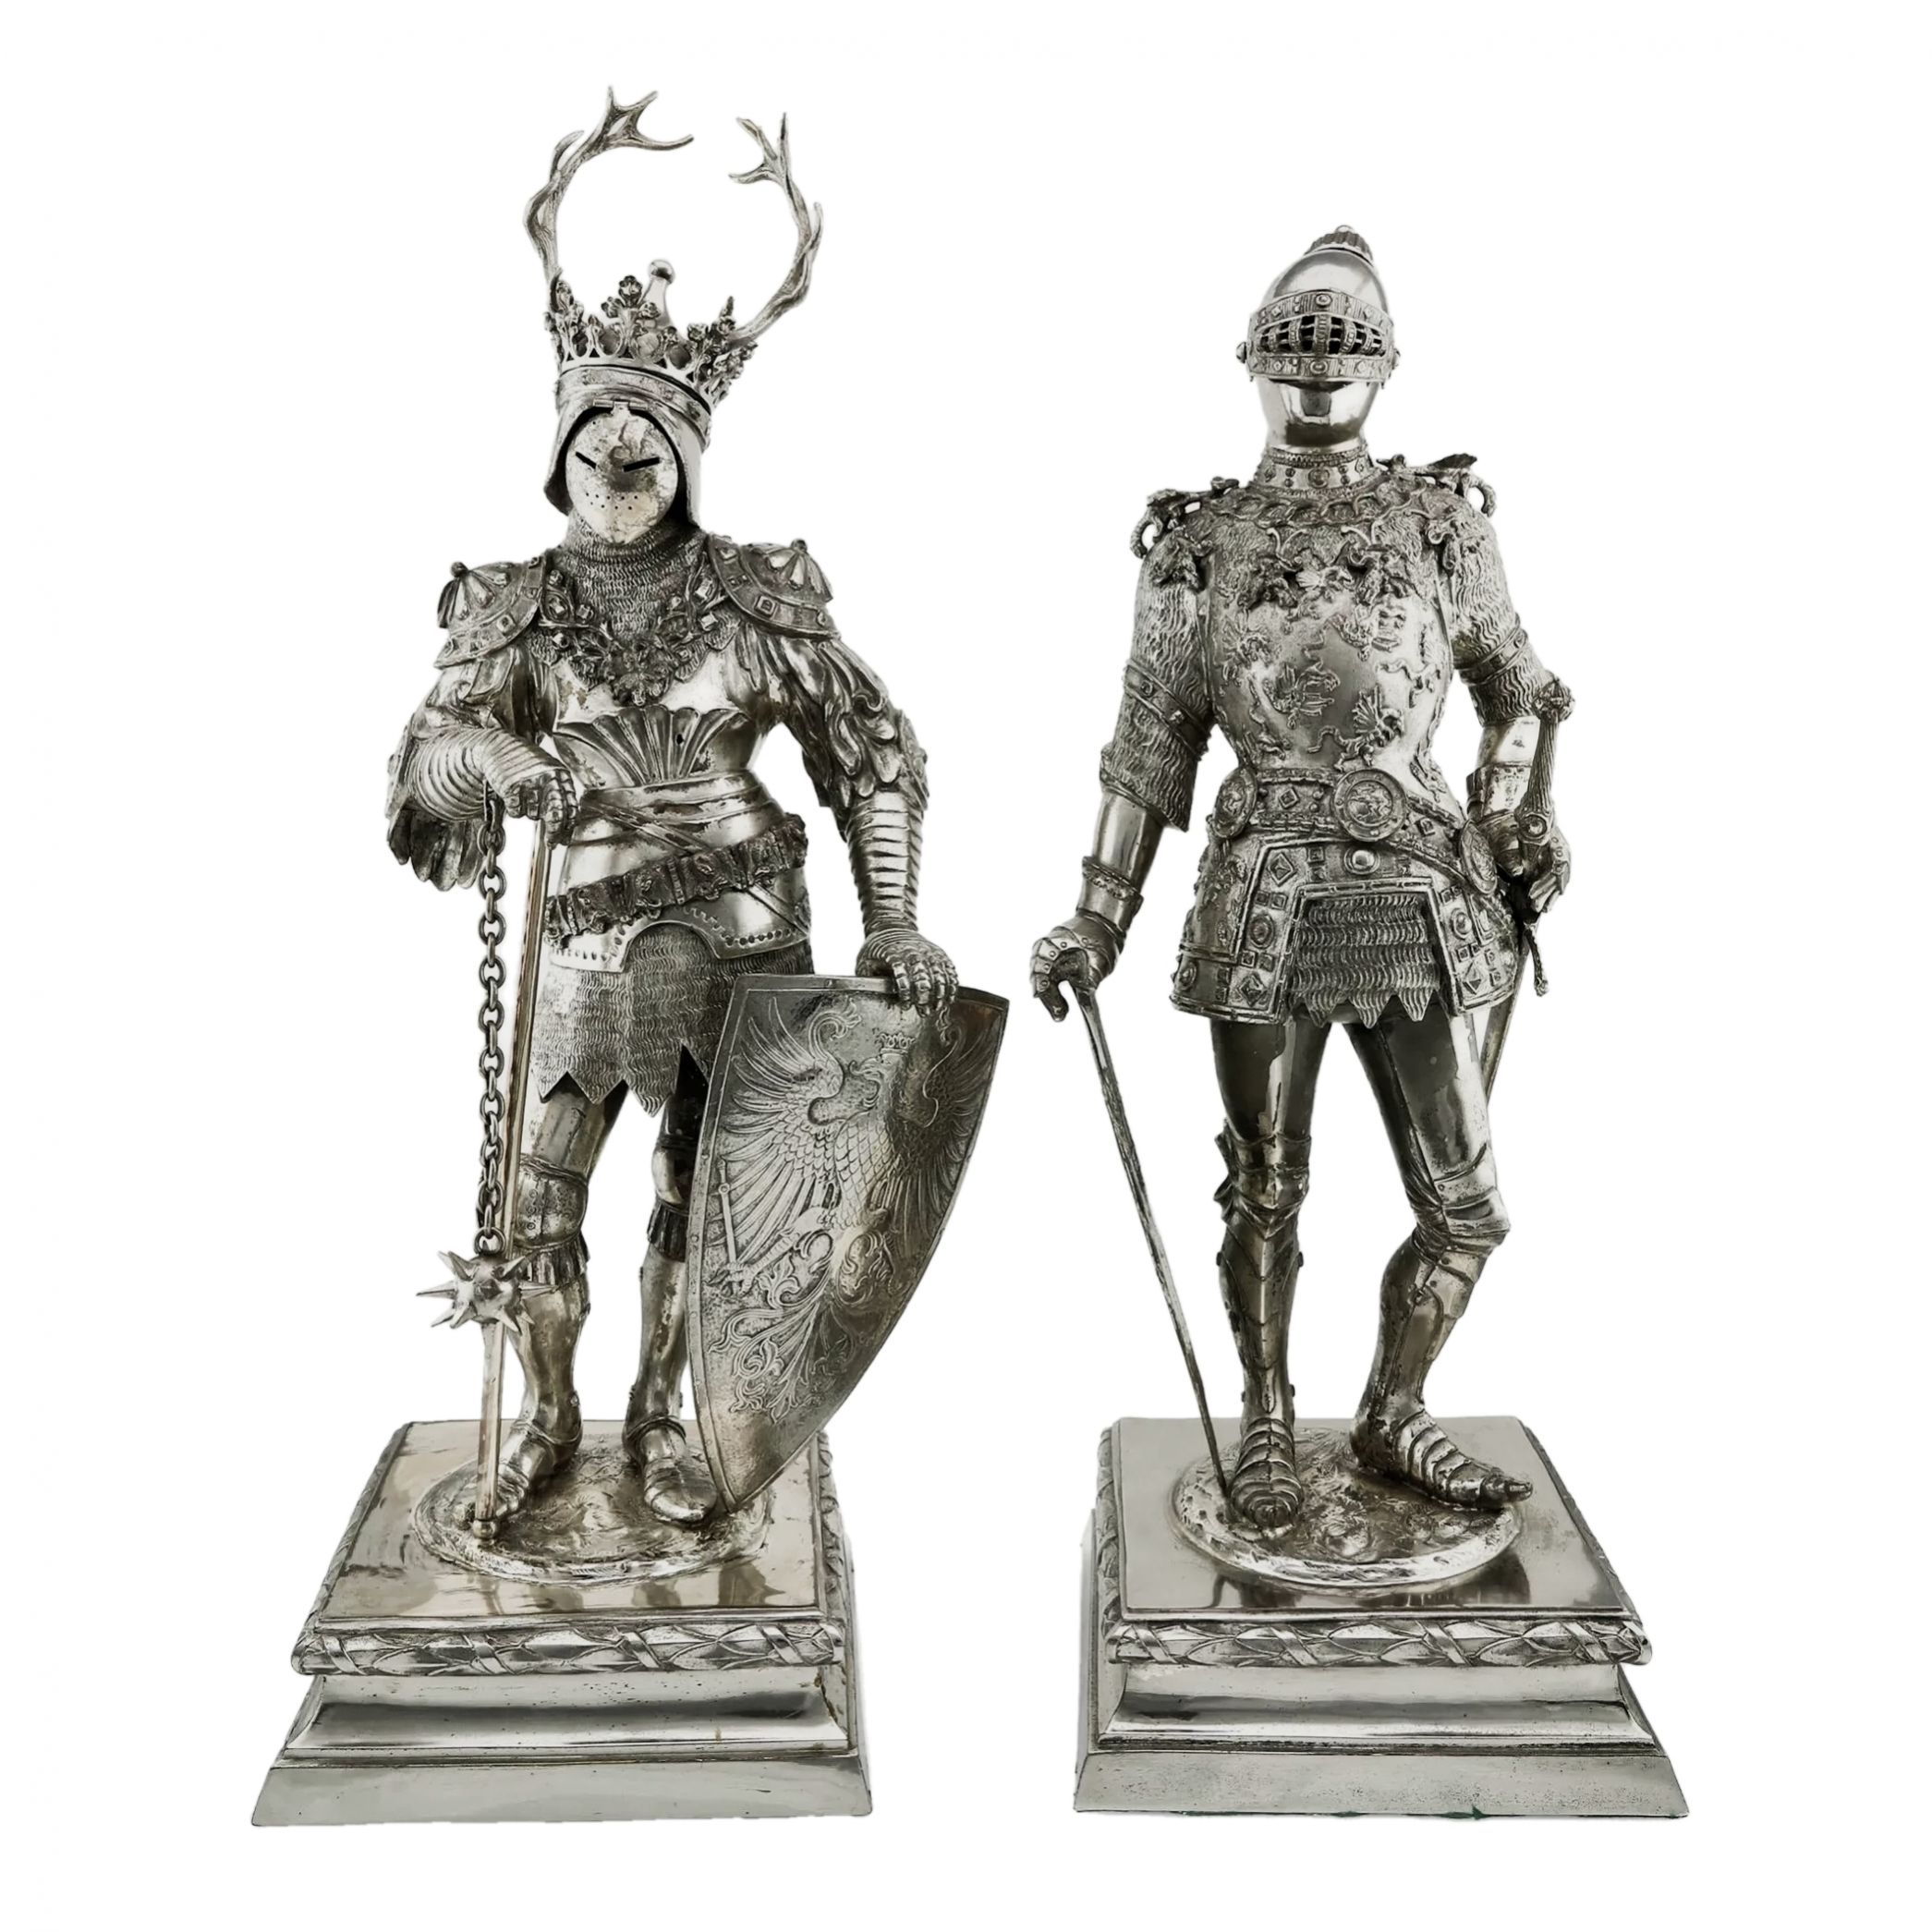 Pair-of-outstanding-cabinet-figures-of-knights-in-silver-19th-century-Hanau-craftsmen-Neresheimer-